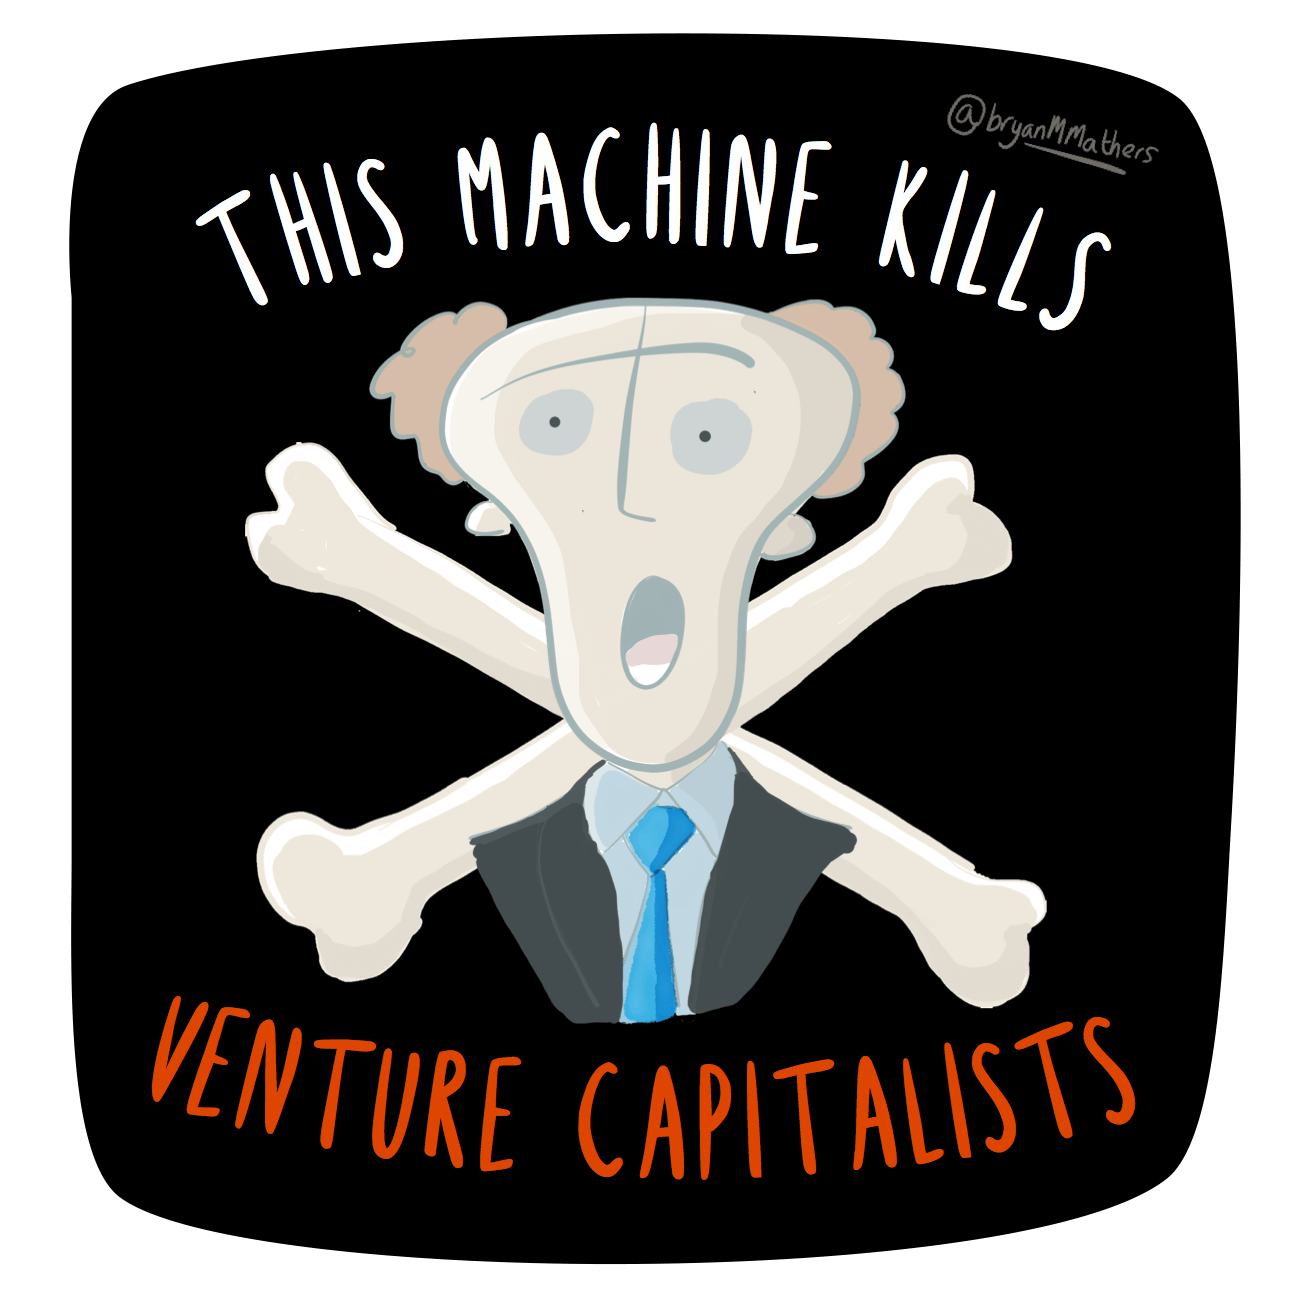 This Machine kills VCs